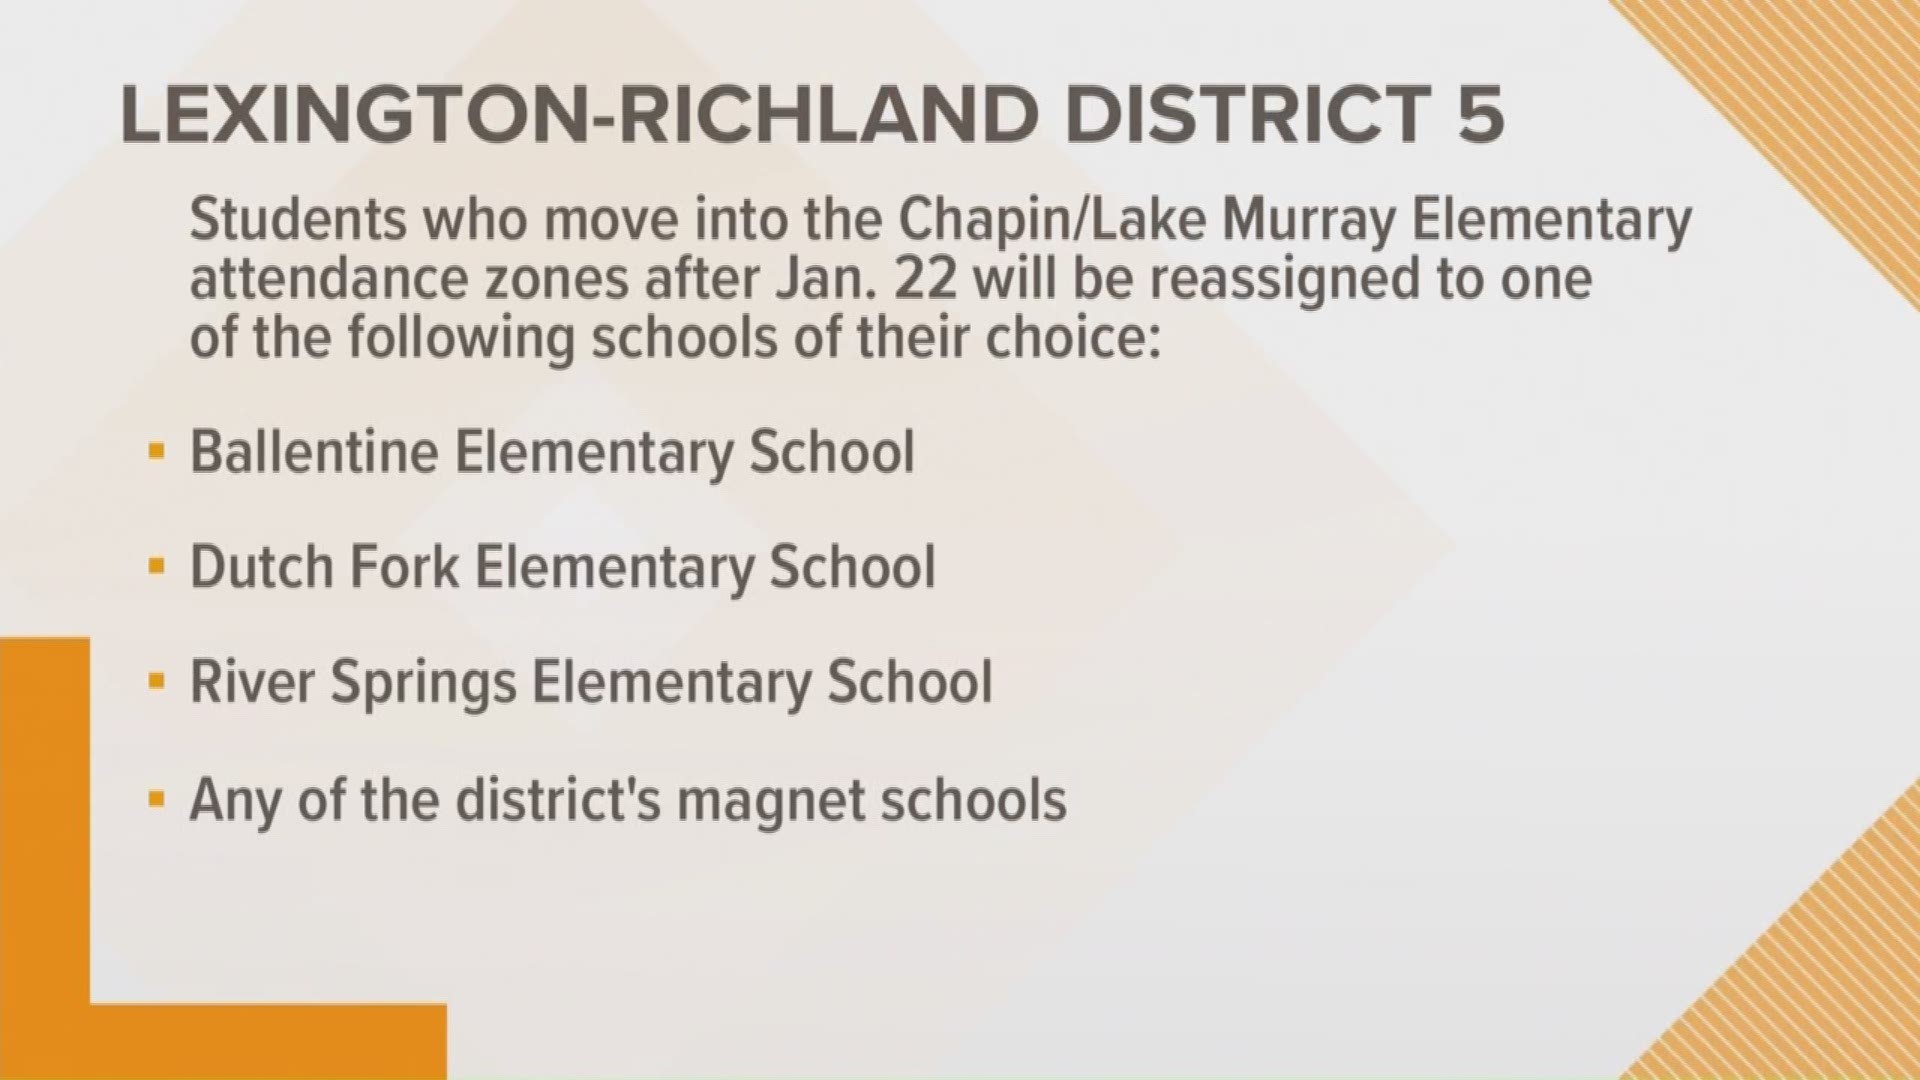 Chapin and Lake Murray Elementary schools freezing enrollment